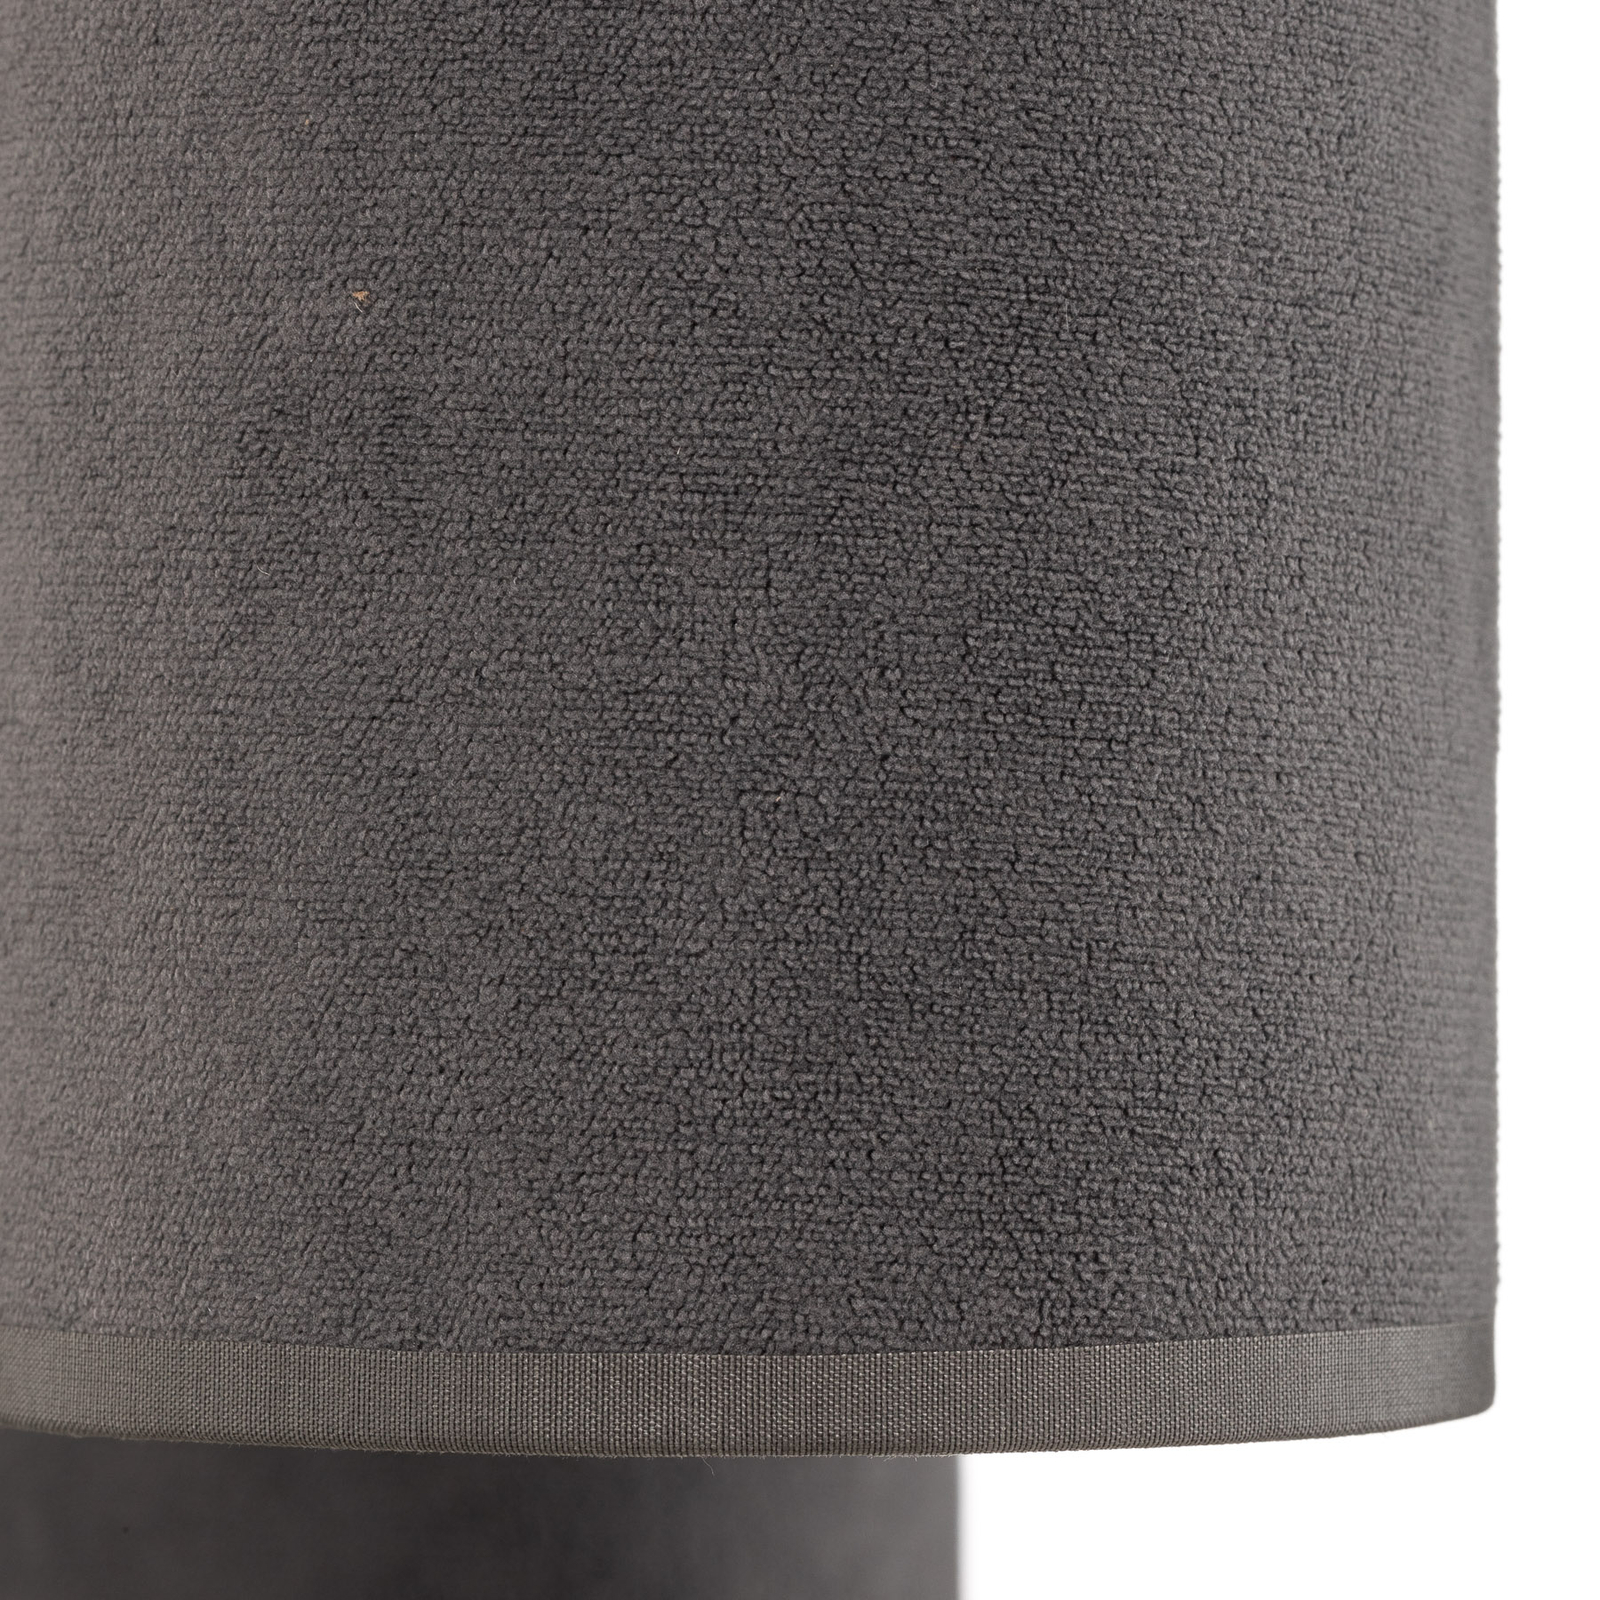 Hanglamp Joni, textiel, 4-lamps rond, grijs-goud